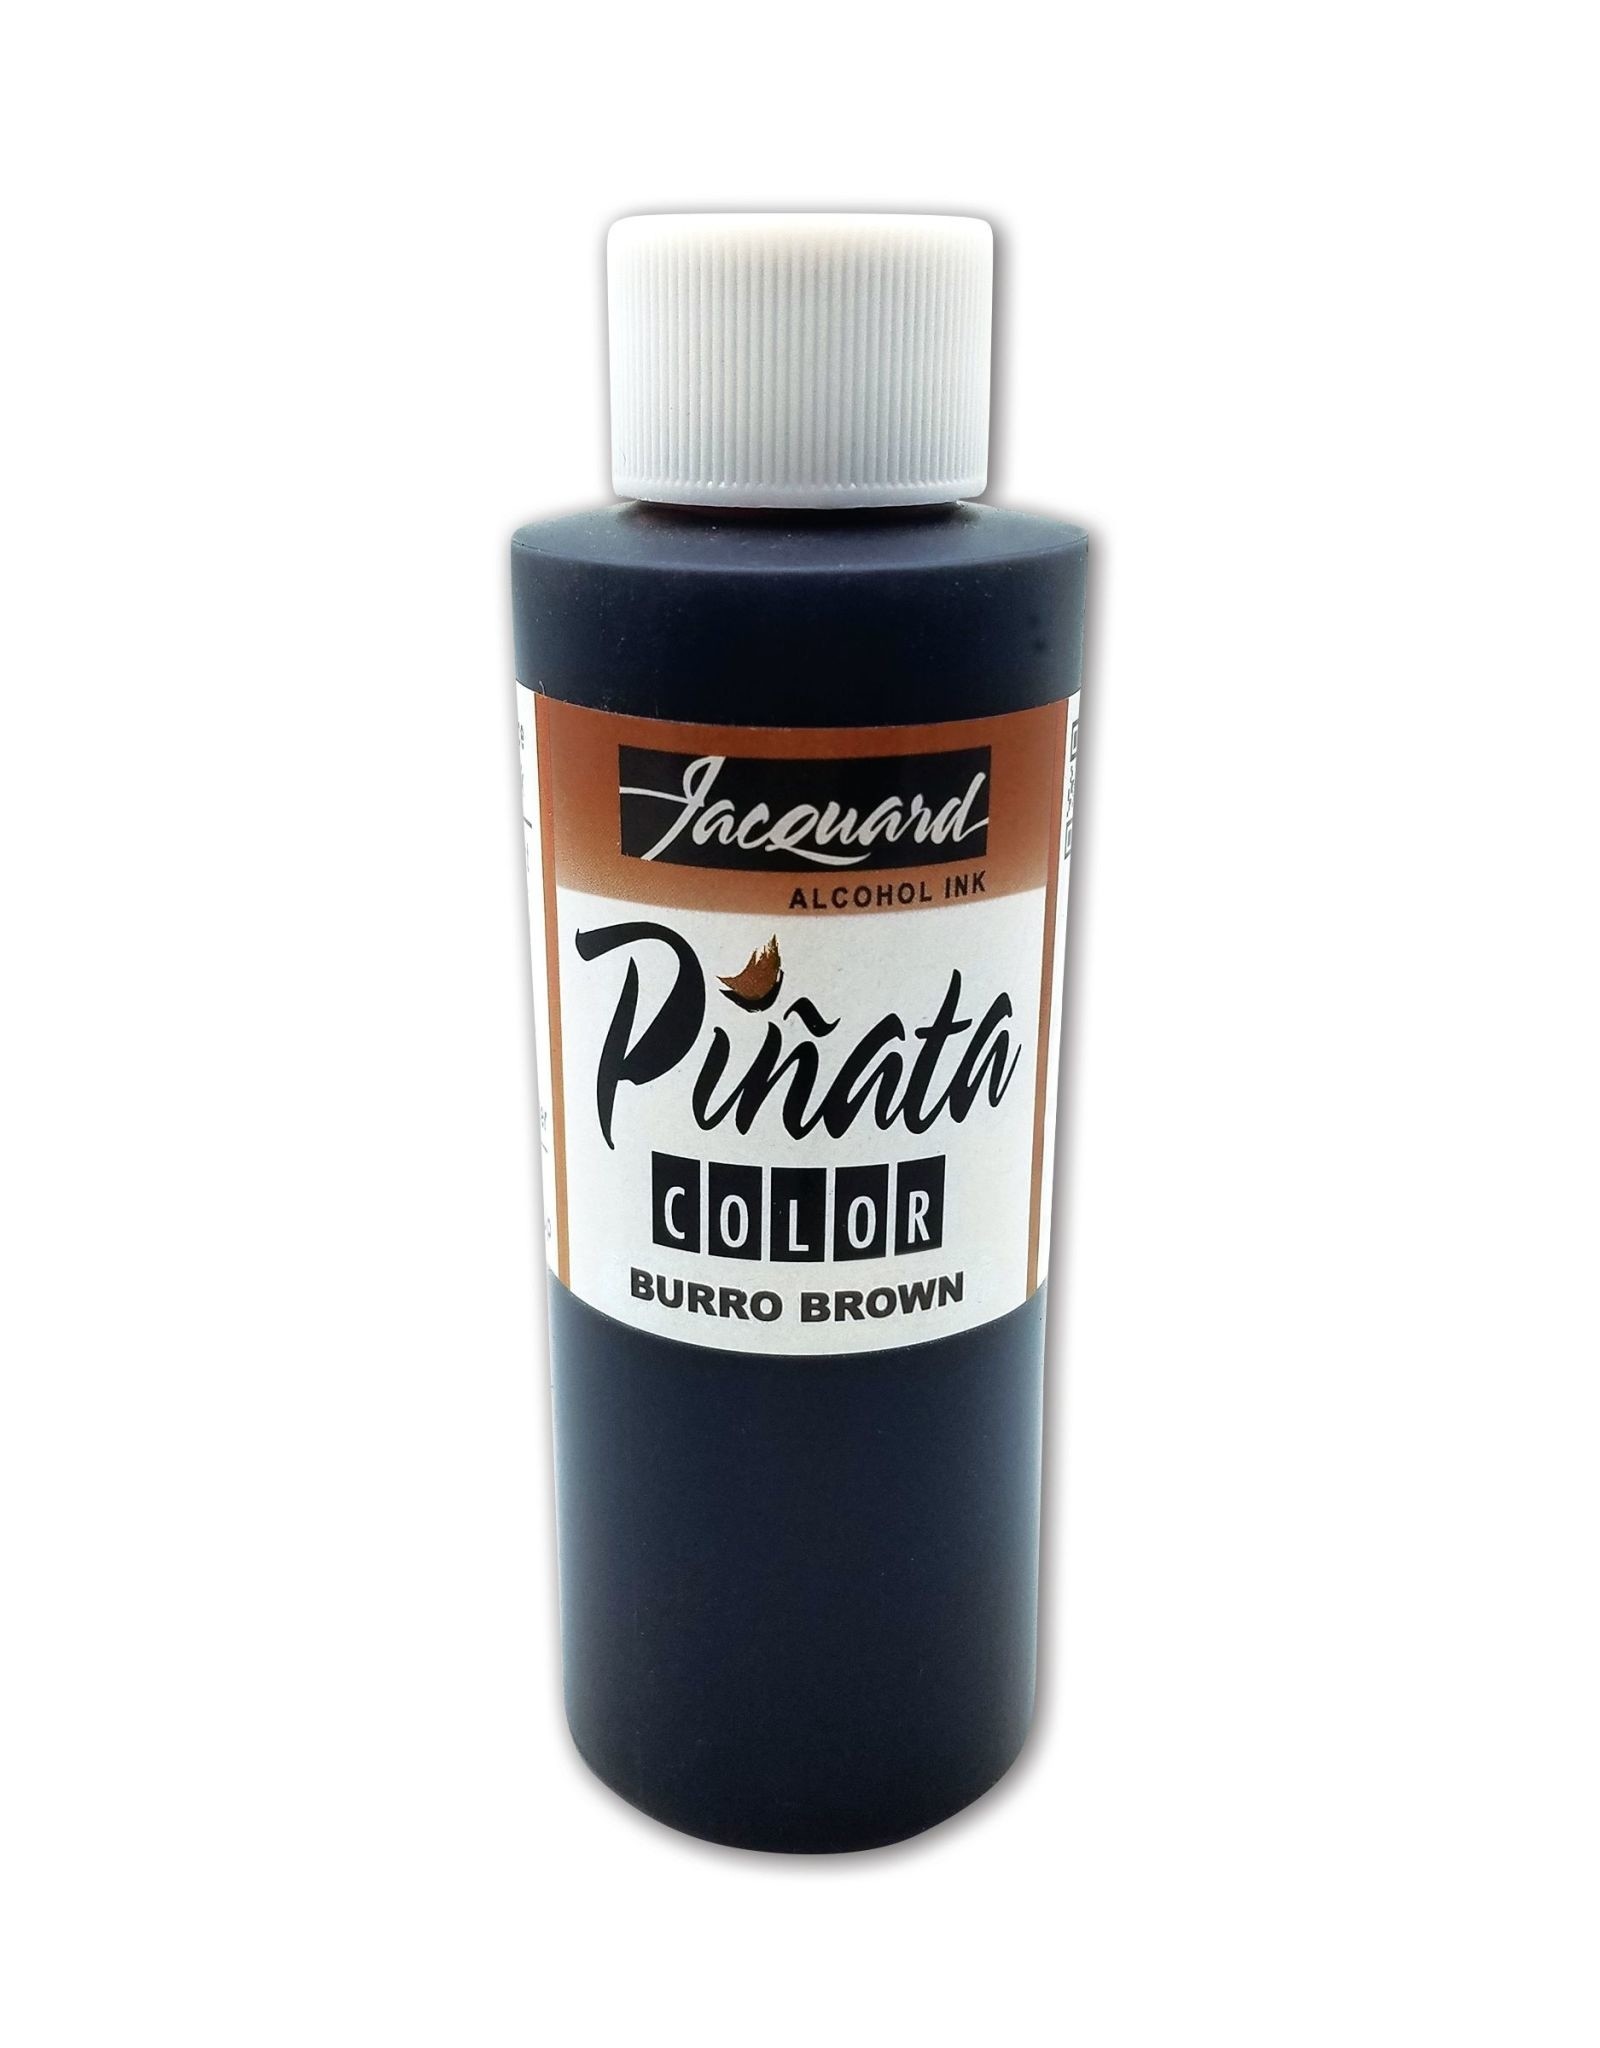 Jacquard Jacquard Pinata Alcohol Ink #025 Burro Brown 4oz